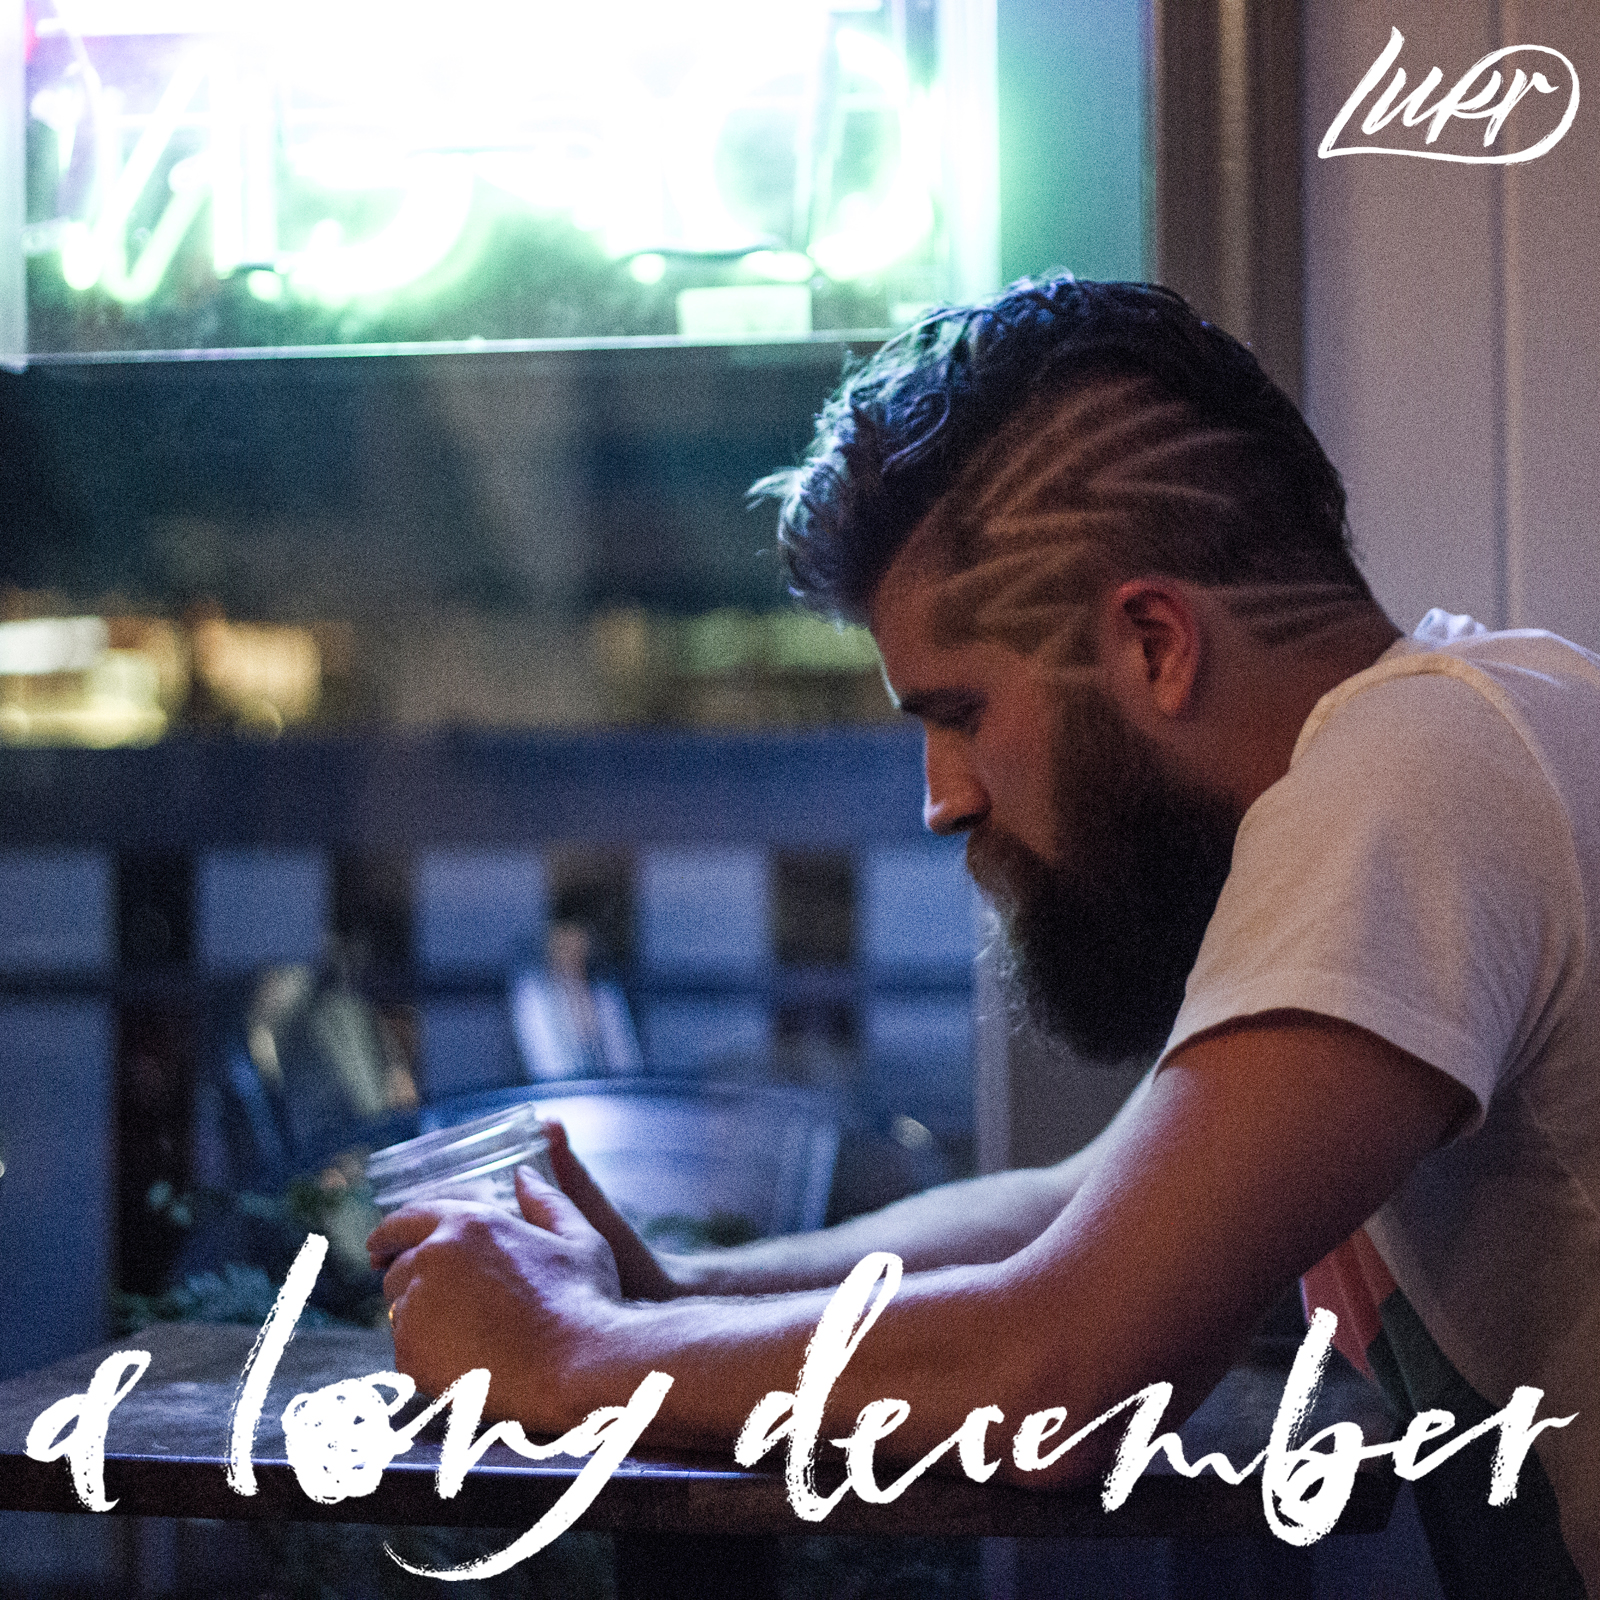 Lukr – “A Long December”